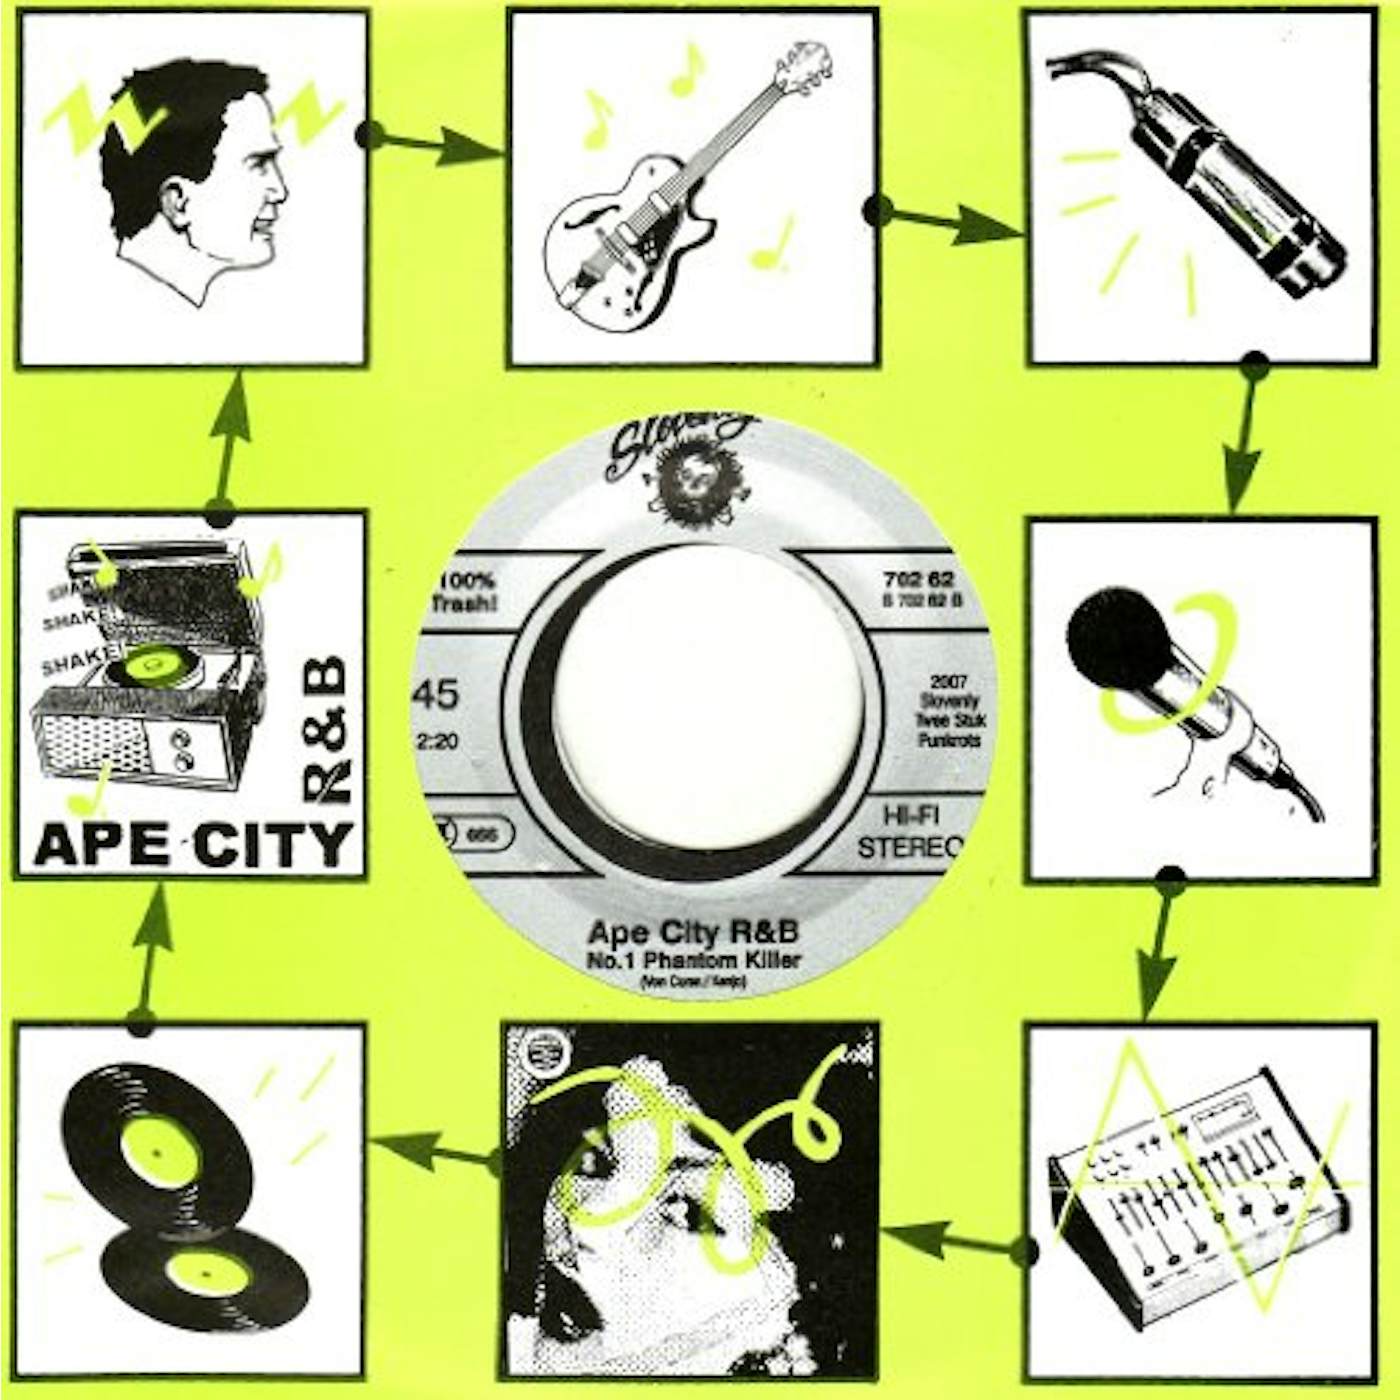 Ape City R&B DYN-O-MITE / 1 PHANTOM KILLER Vinyl Record